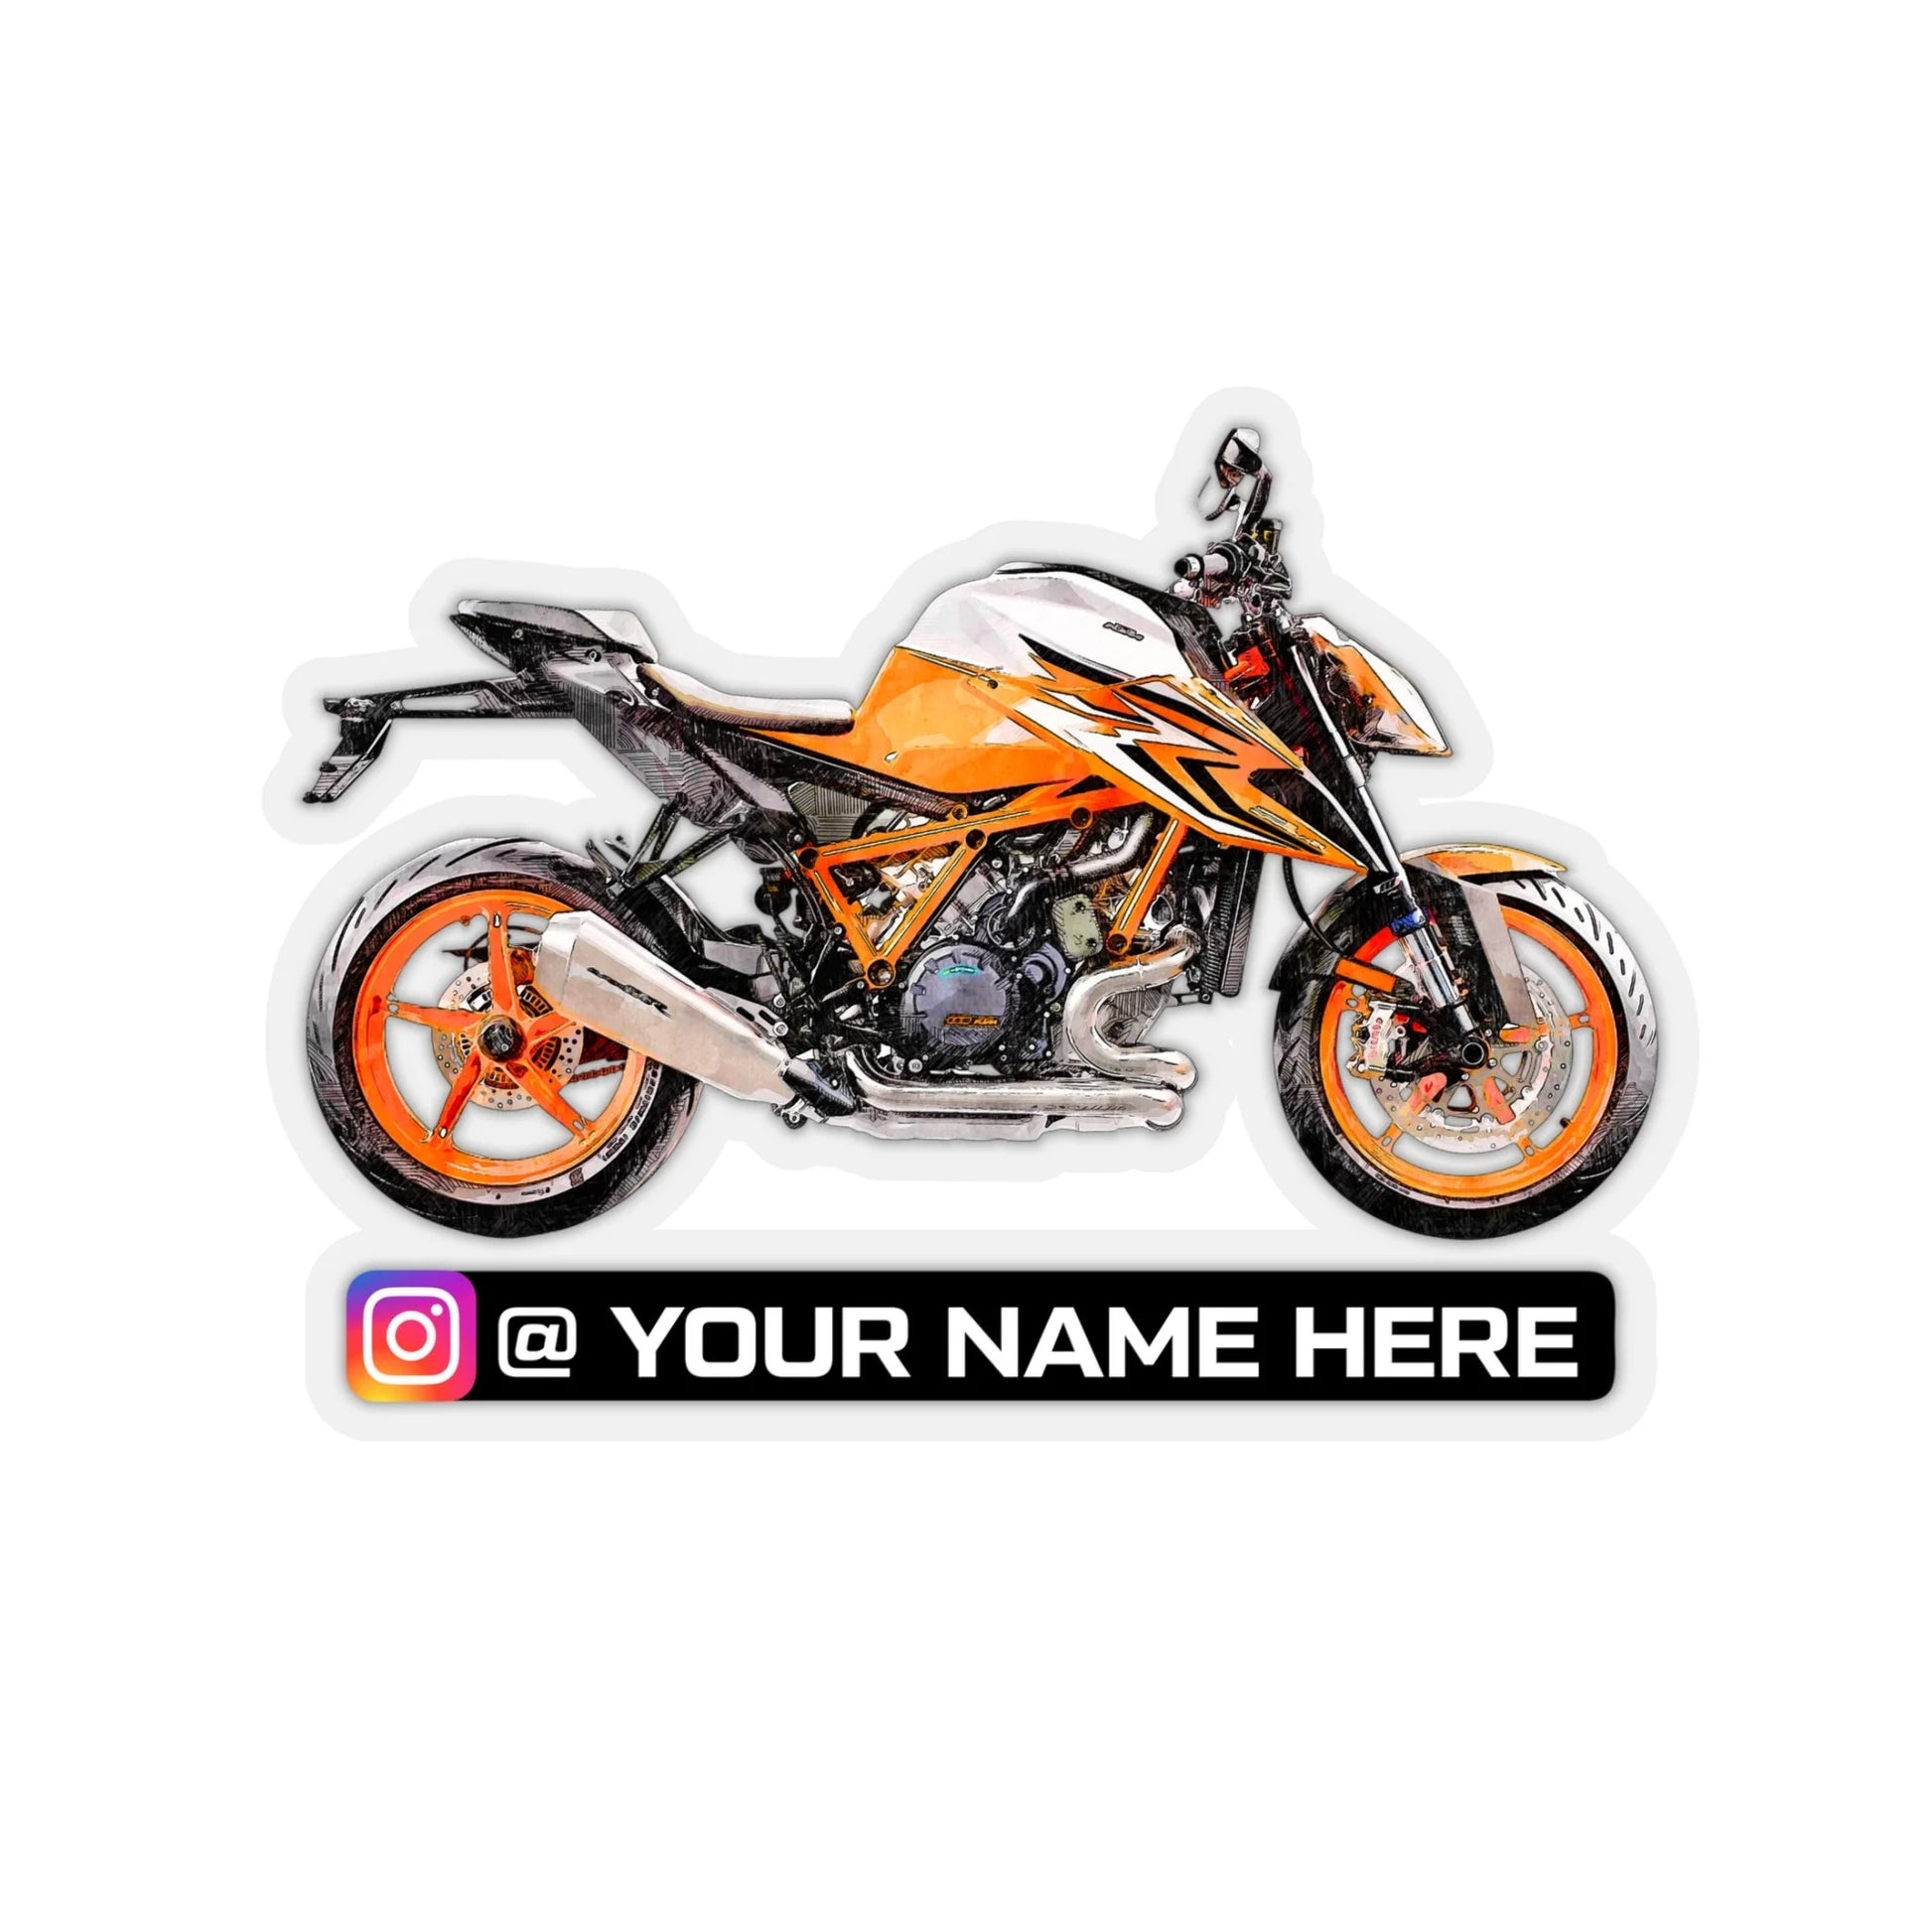 DRAW MY MOTORCYCLE Sticker Instagram Username